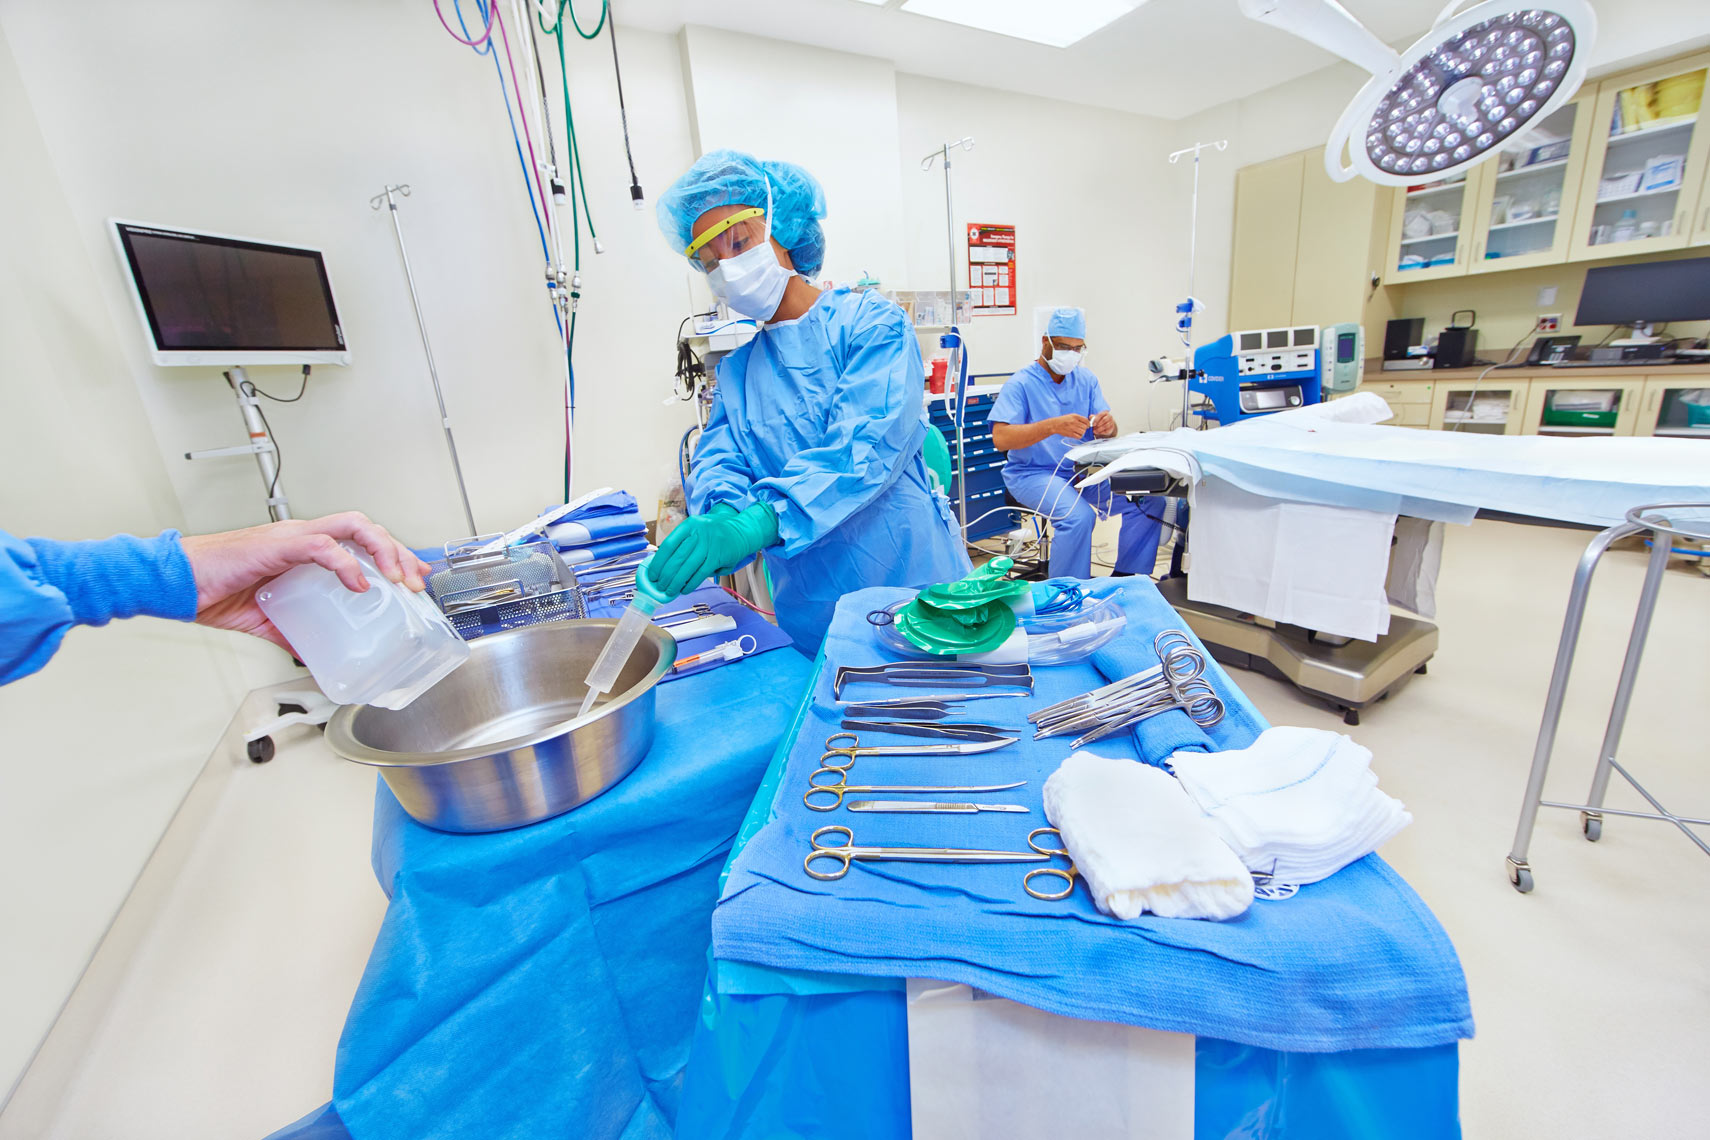 3M Sterilization/OR prep/medical photography